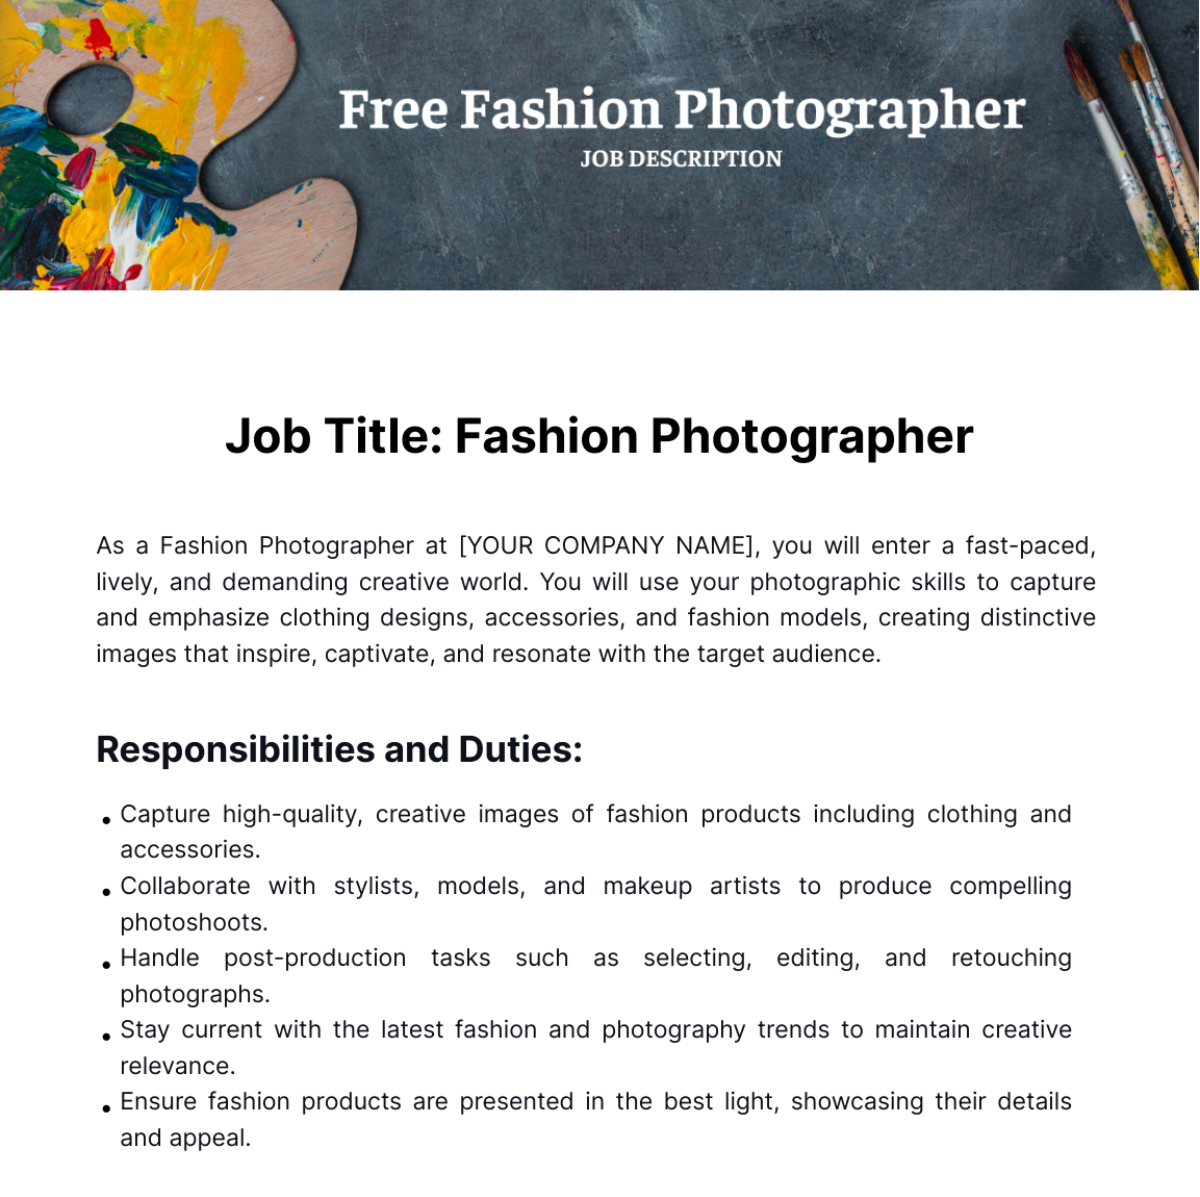 Free Fashion Photographer Job Description Template